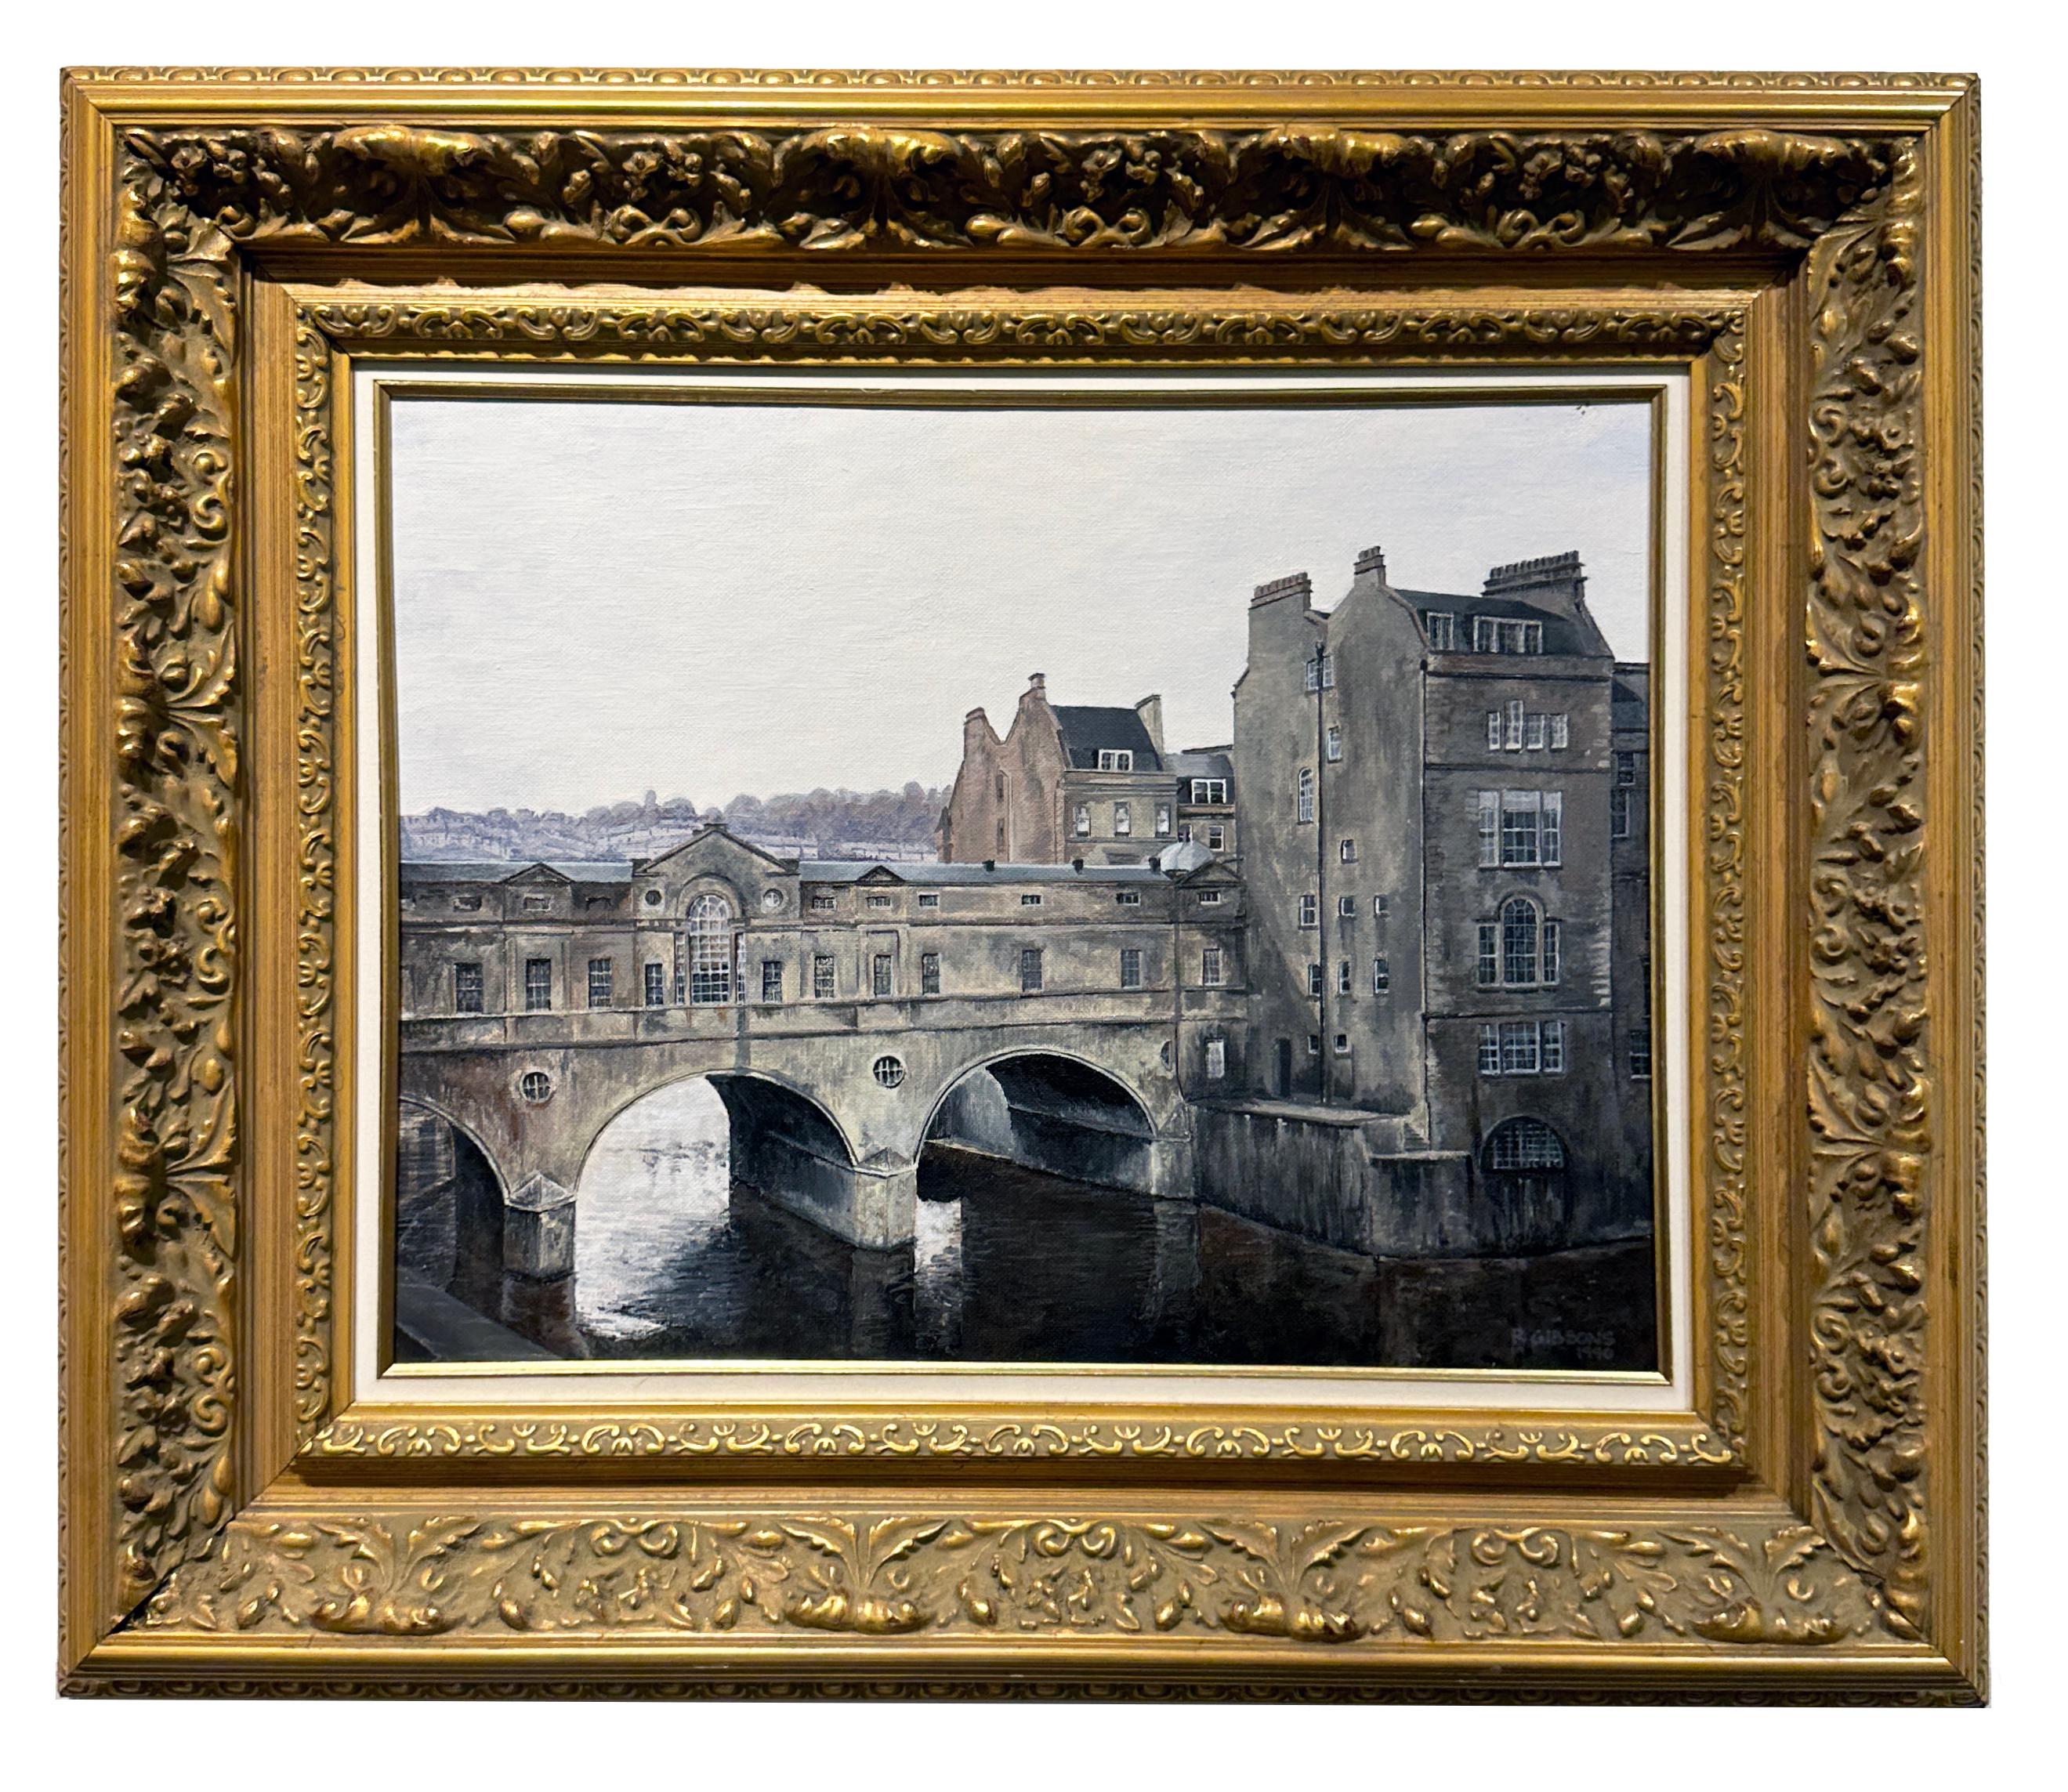 Richard Gibbons Landscape Painting - Pulteney Bridge, Bath, England - Framed Landscape, Original Oil on Canvas